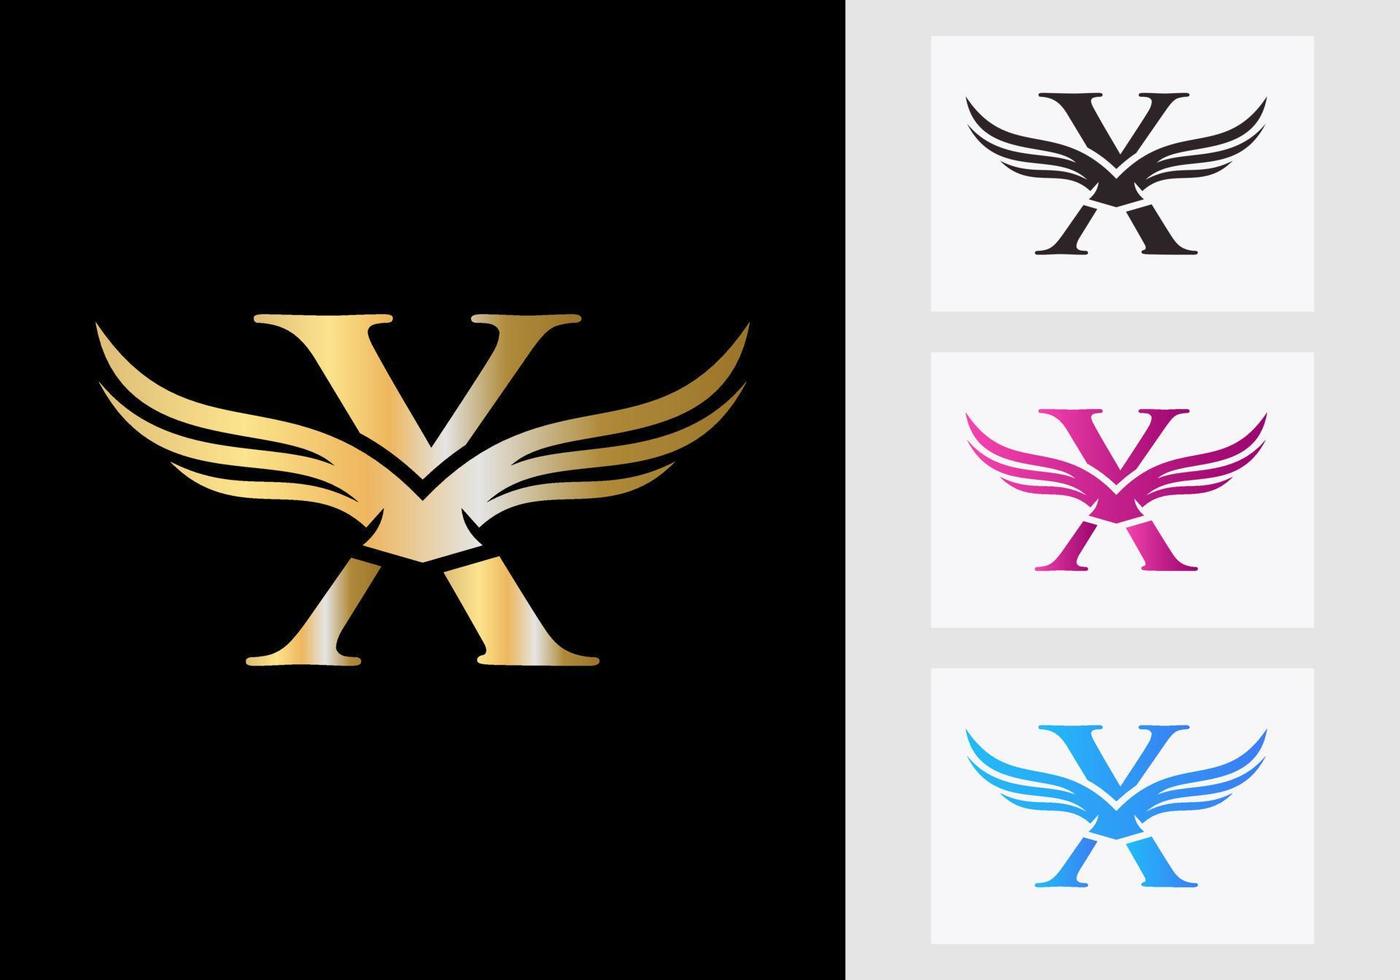 x brev vinge logotyp design. första flygande vinge symbol vektor